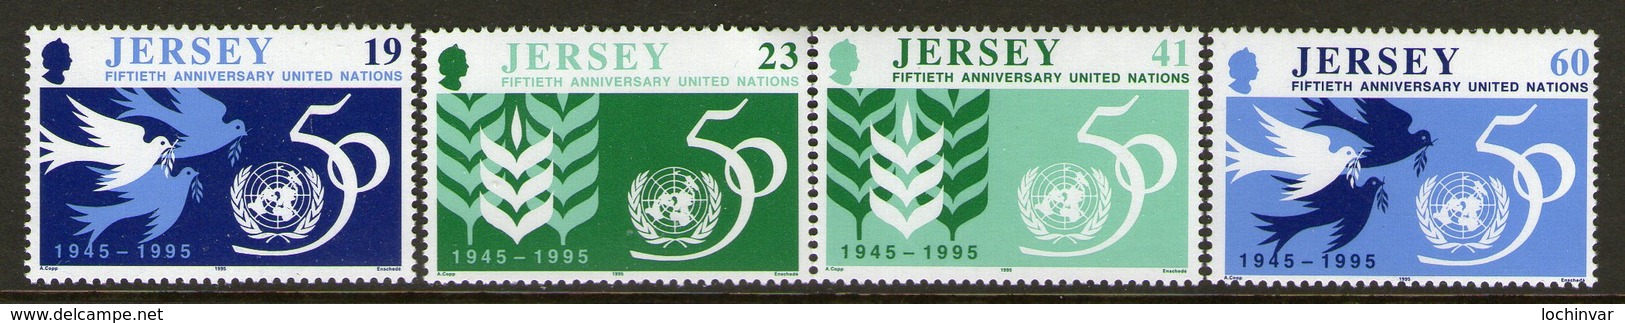 JERSEY, 1995 UNITED NATIONS 4 MNH - Jersey